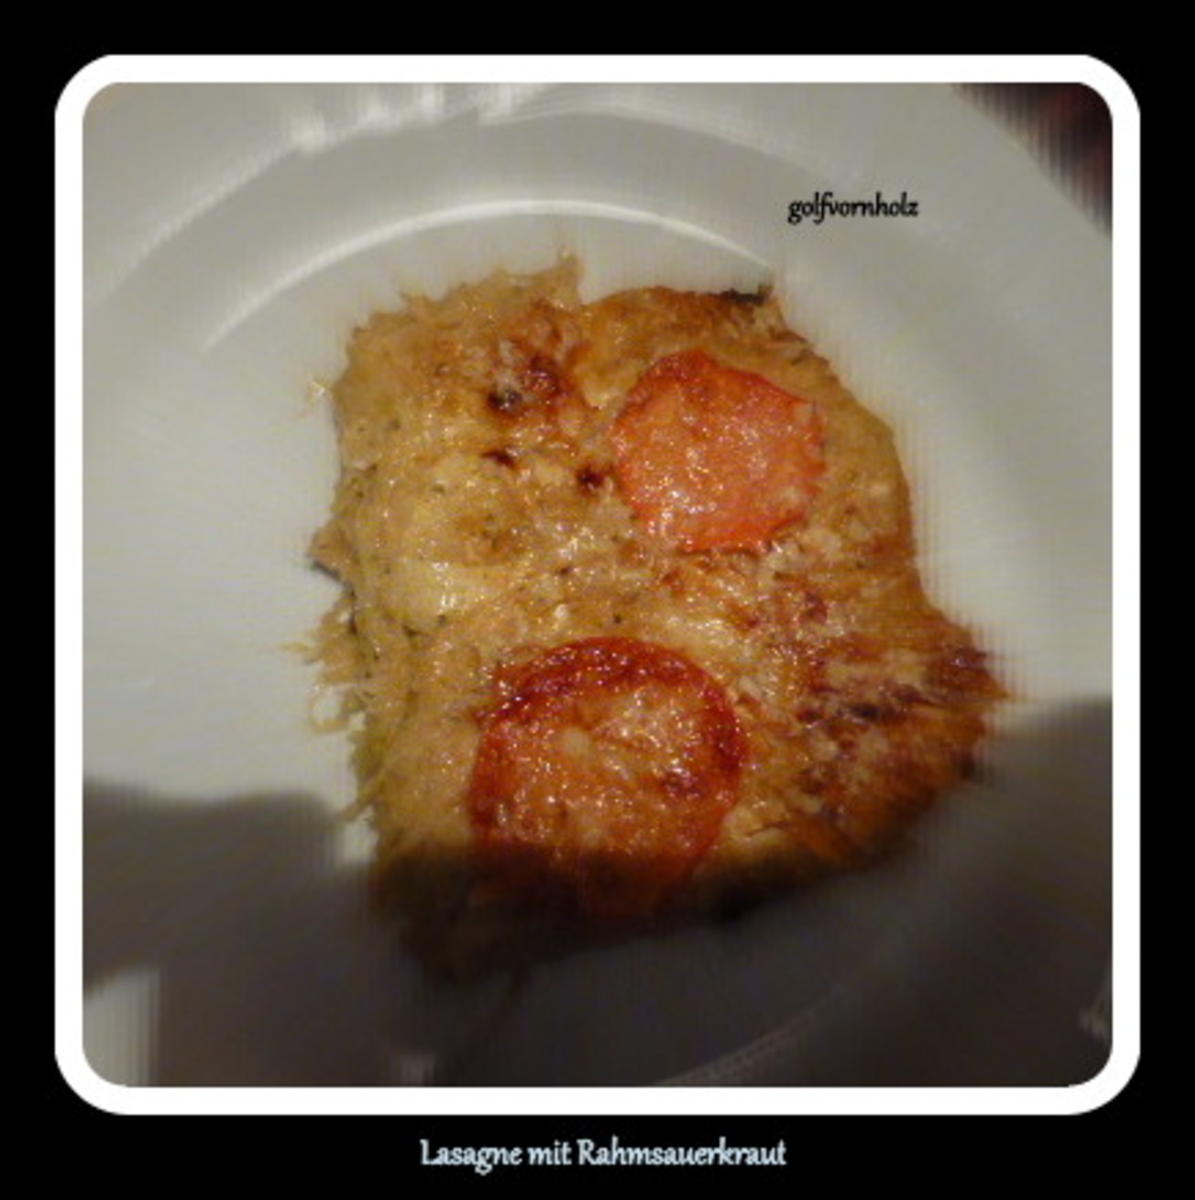 Lasagne mit Rahmsauerkraut - Rezept - Bild Nr. 4303